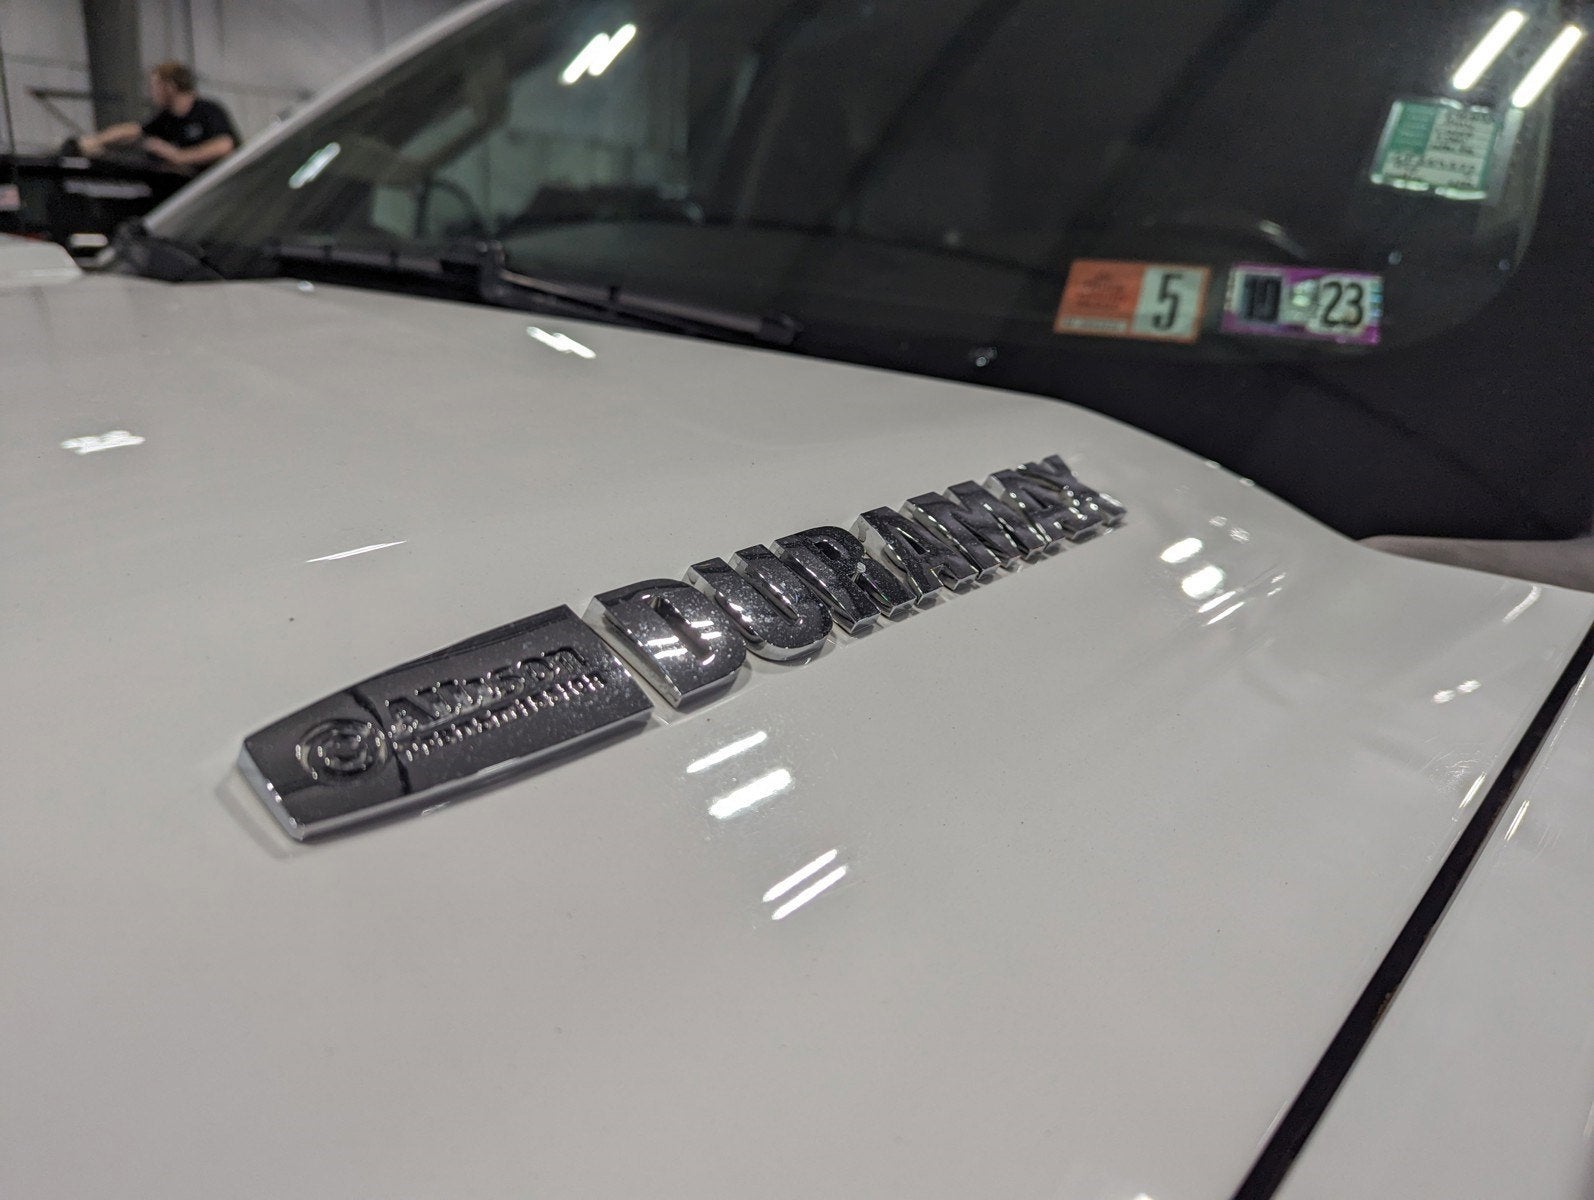 2016 Chevrolet Silverado 3500HD LTZDuramax Premium Leather Heated Preferred Equipment Pkg Nav